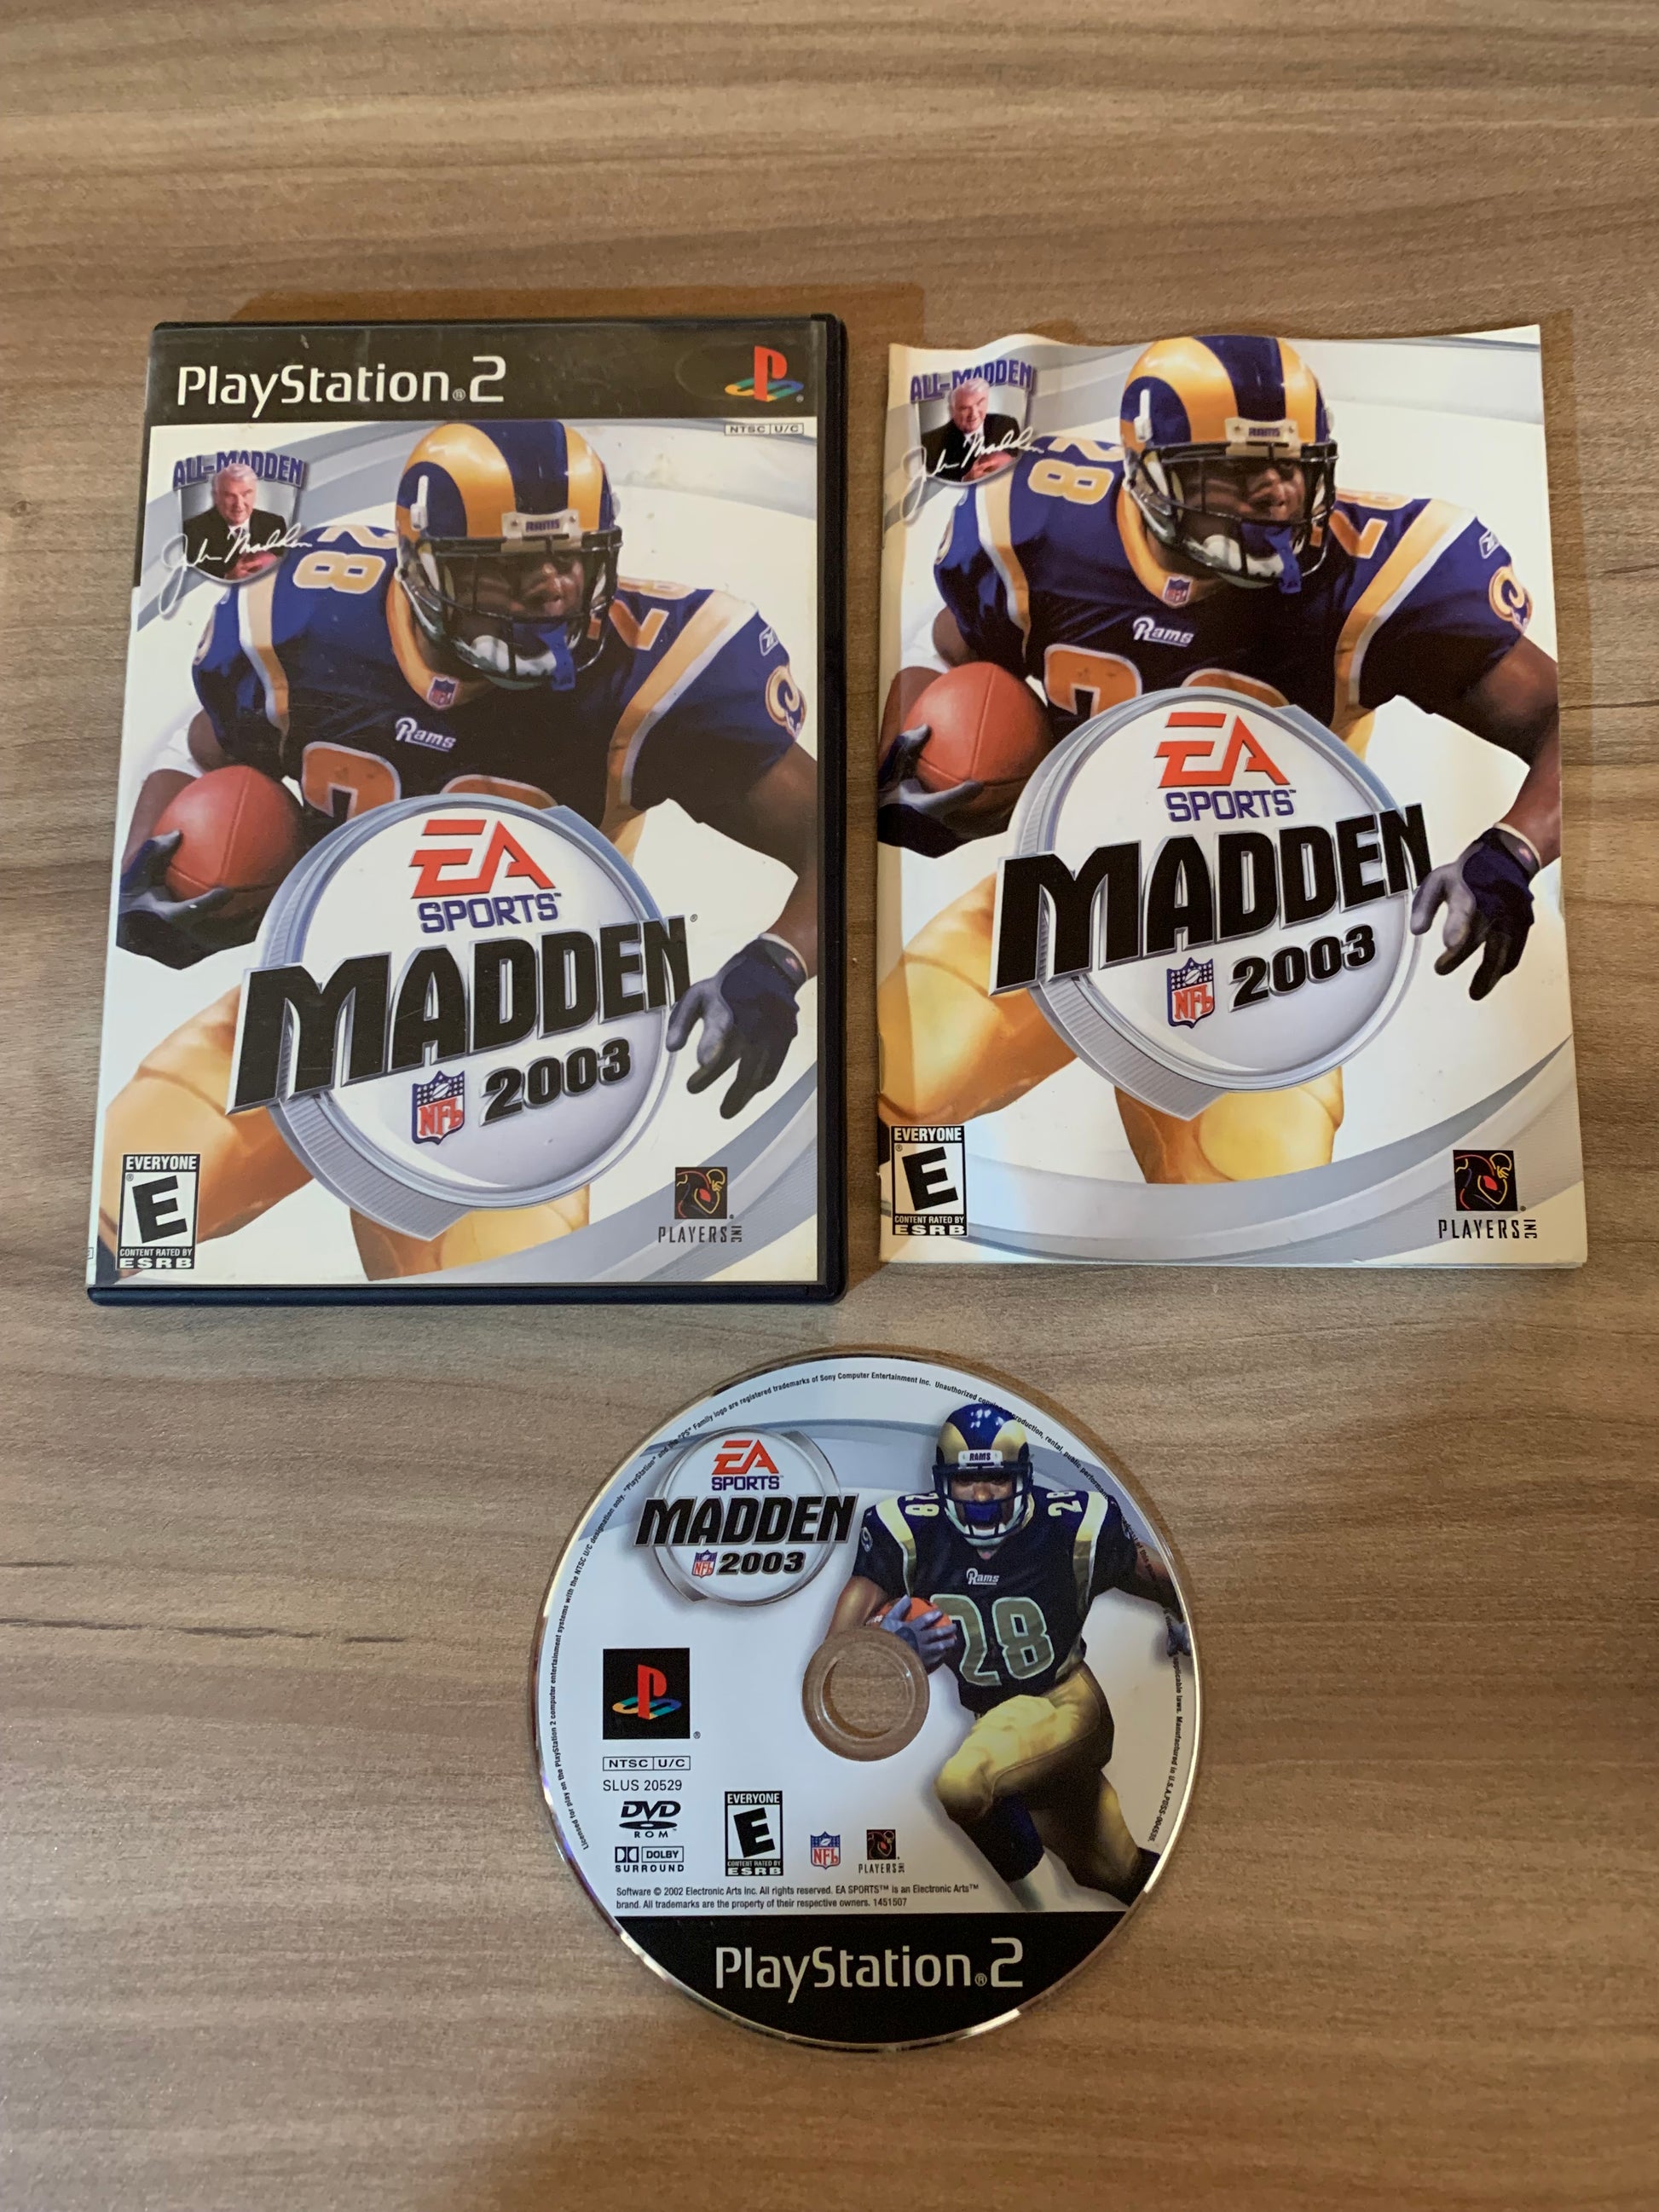 PiXEL-RETRO.COM : SONY PLAYSTATION 2 (PS2) COMPLET CIB BOX MANUAL GAME NTSC MADDEN NFL 2003